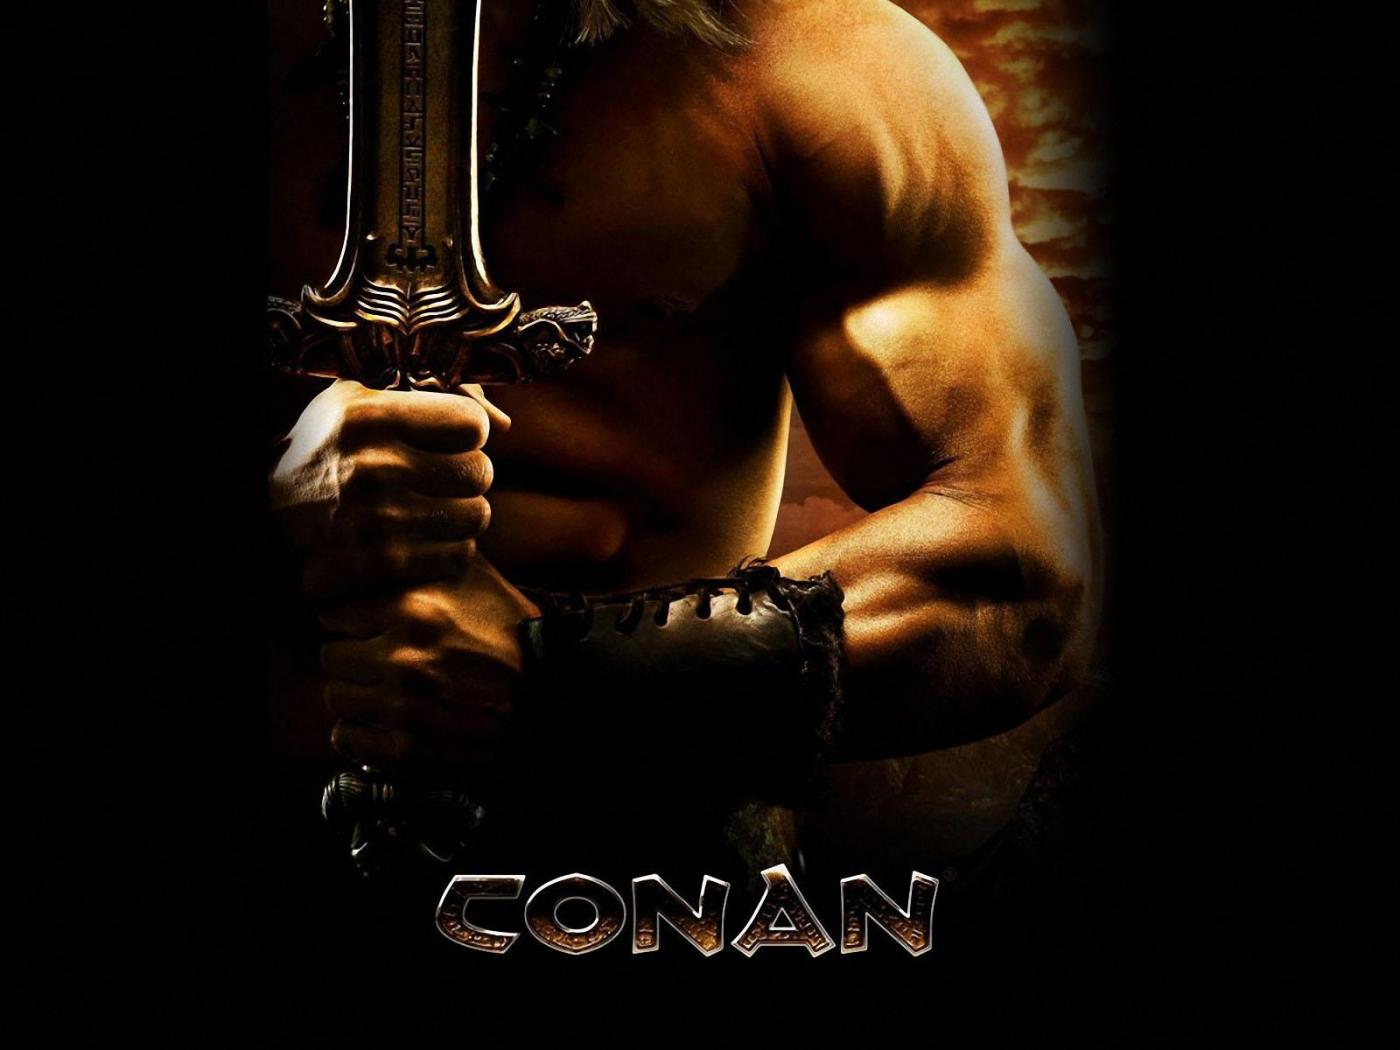 Conan the Barbarian HD 1400x1050 Wallpapers, 1400x1050 Wallpapers ...